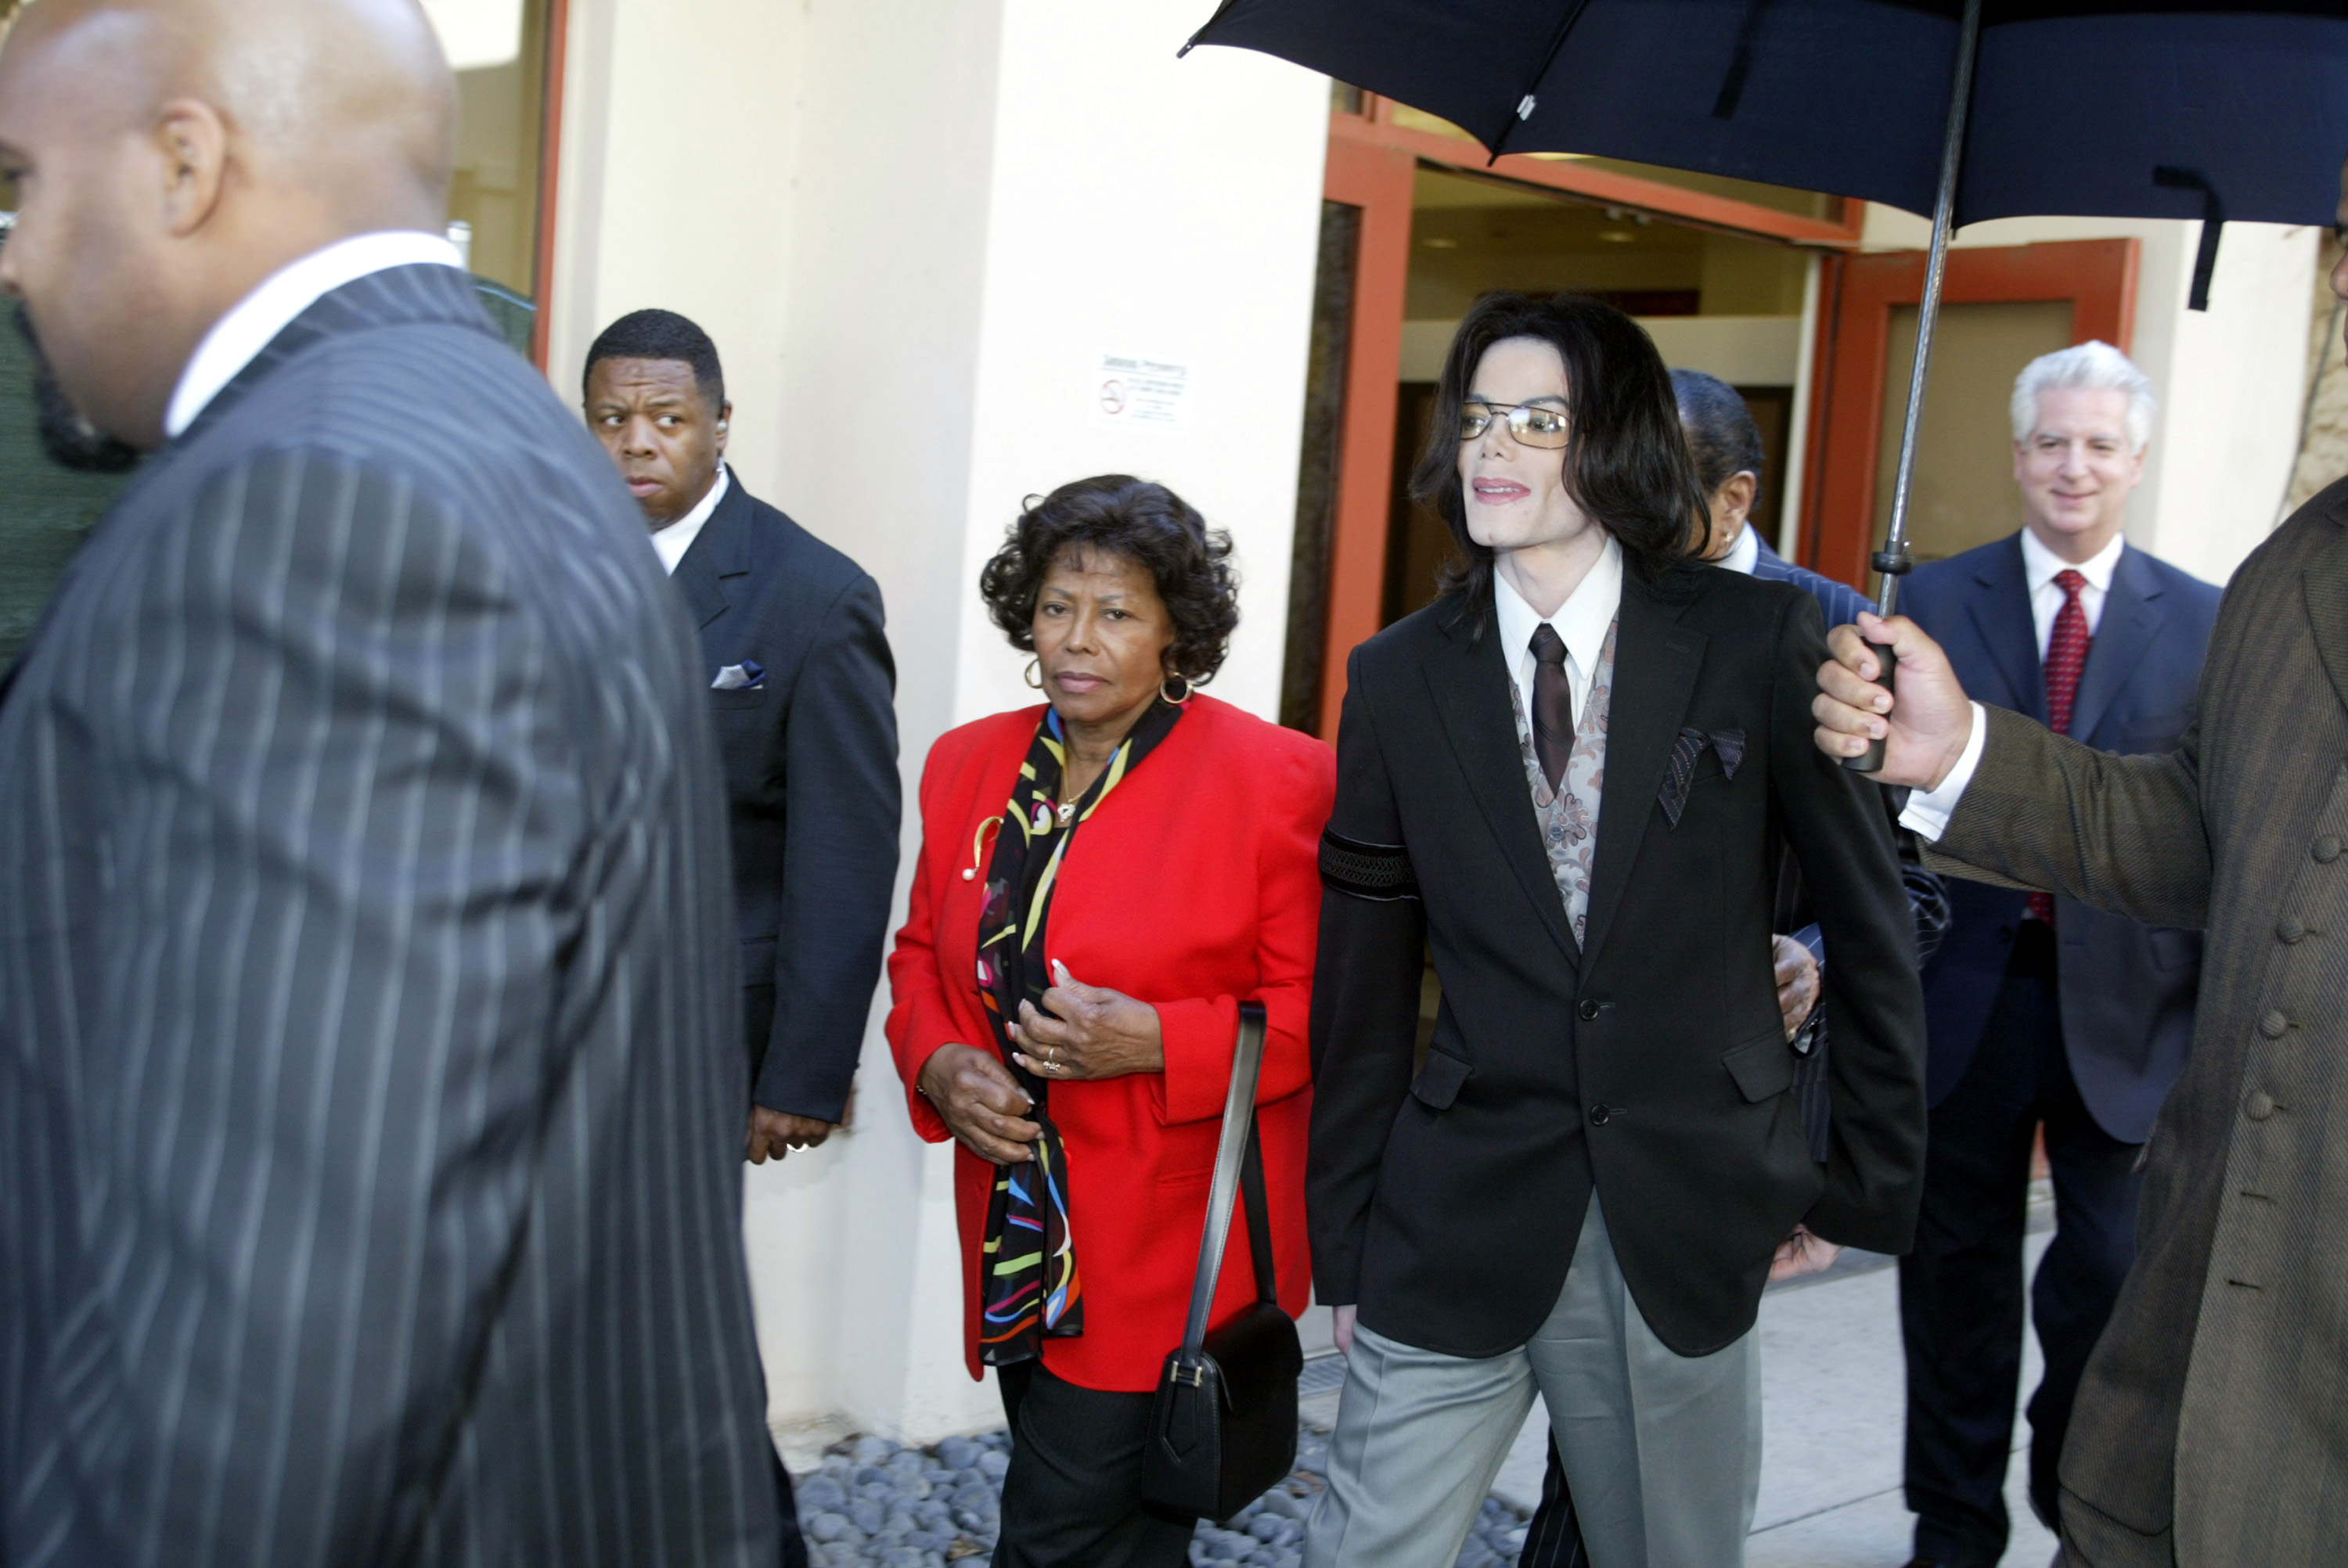 Michael Jackson Accusers Believe Singer’s Camp Is ‘Hiding Info